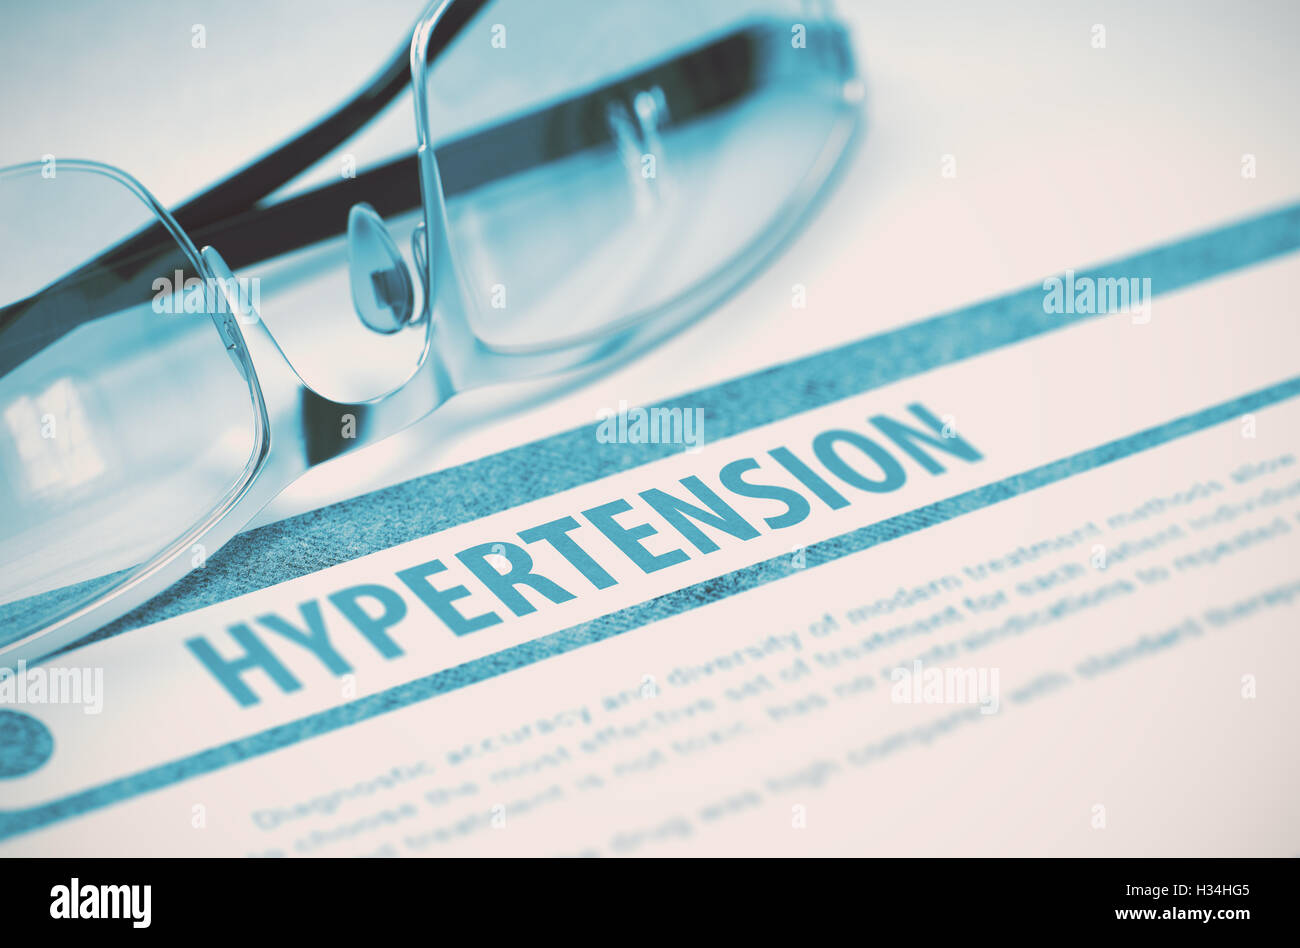 Diagnosis - Hypertension. Medical Concept. 3D Illustration. Stock Photo